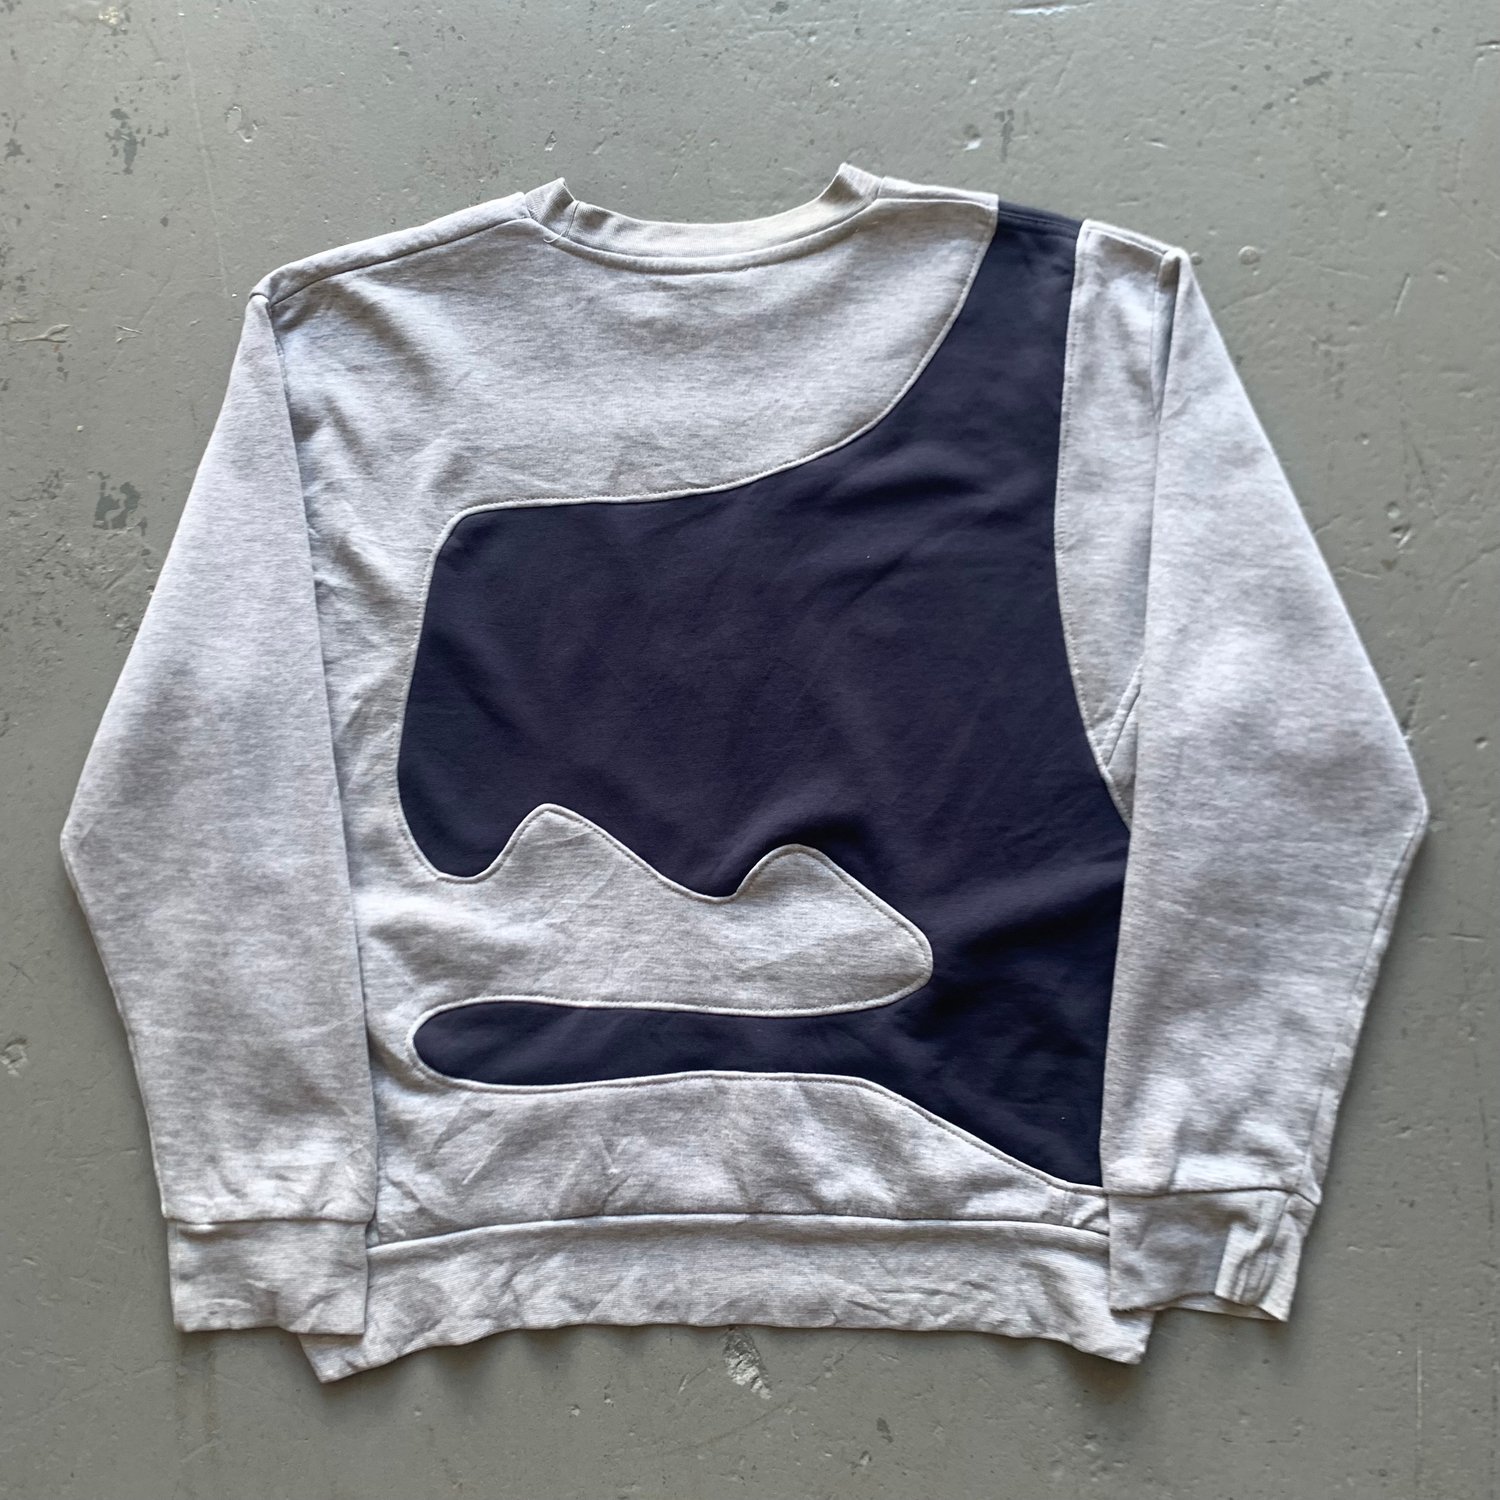 Image of Vintage Nike Athletic rework sweatshirt size medium 